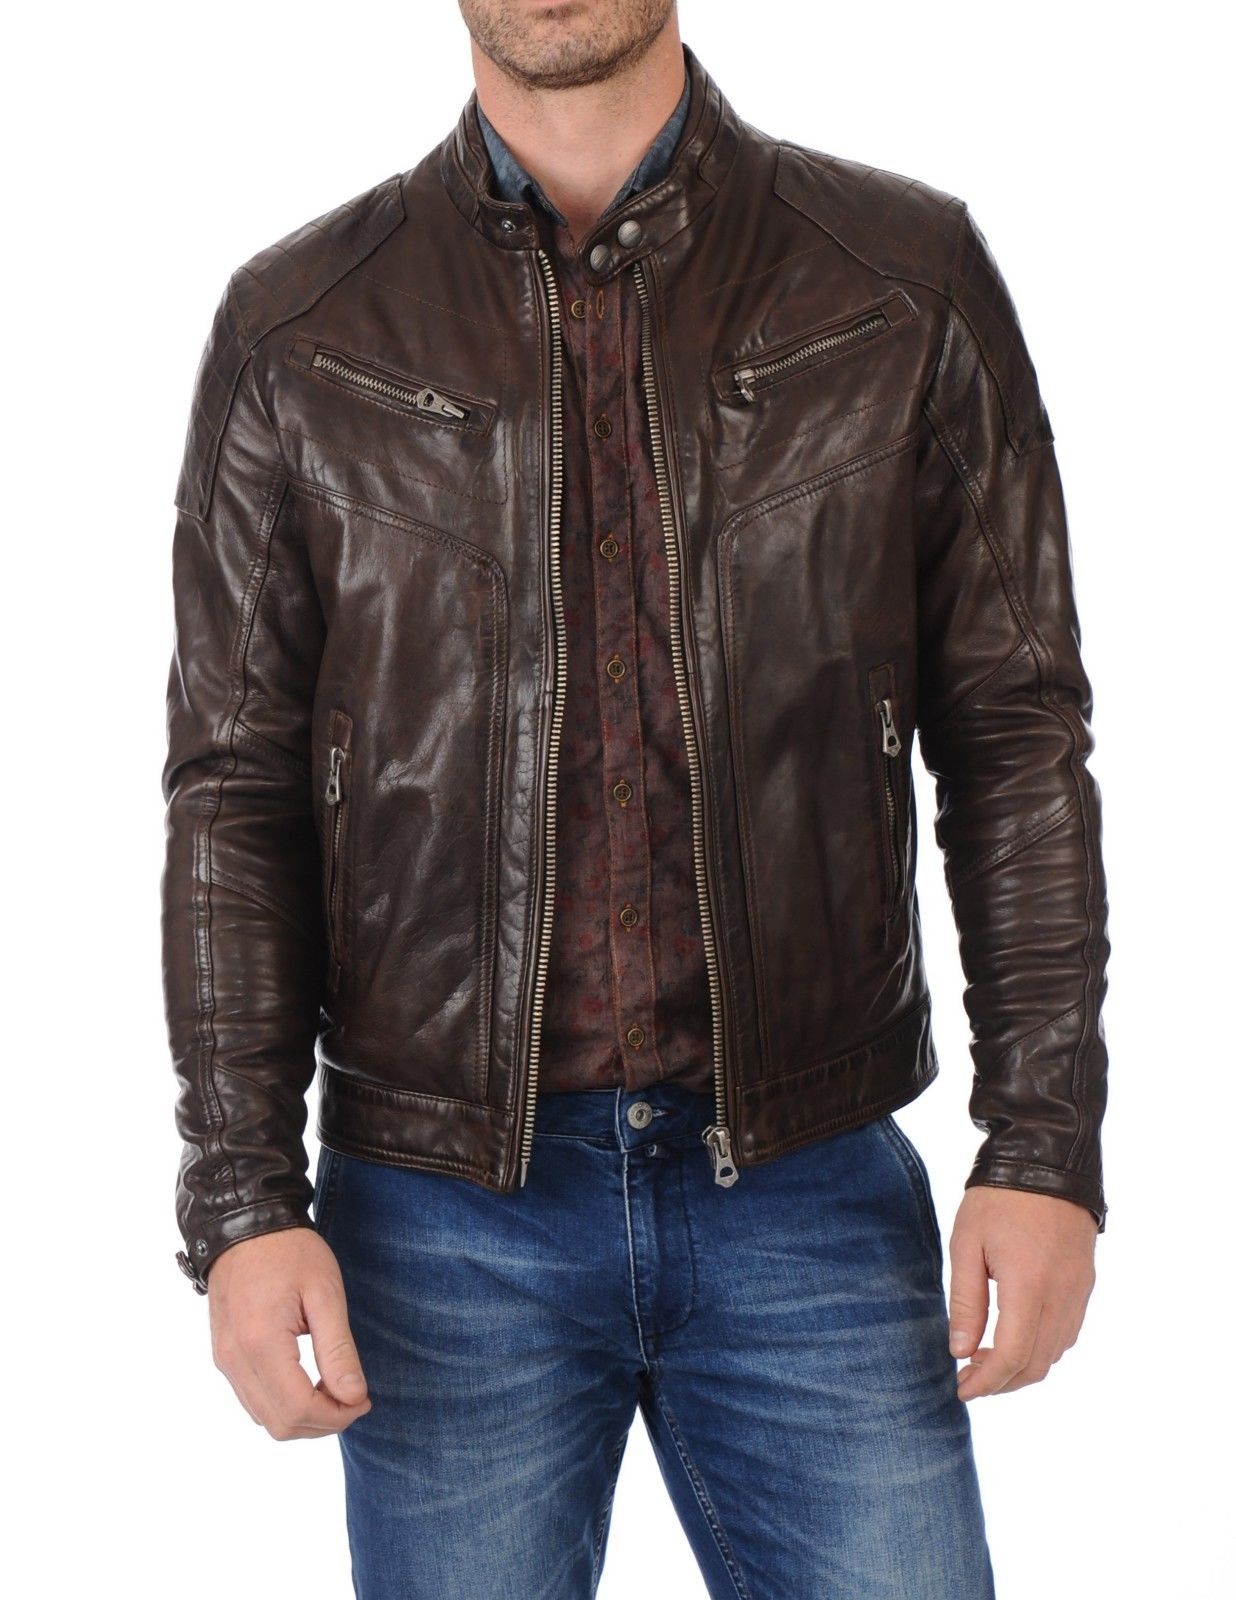 New Men's Slim Fit Designed Brown Leather Jacket Coat Motor Biker Coat ...